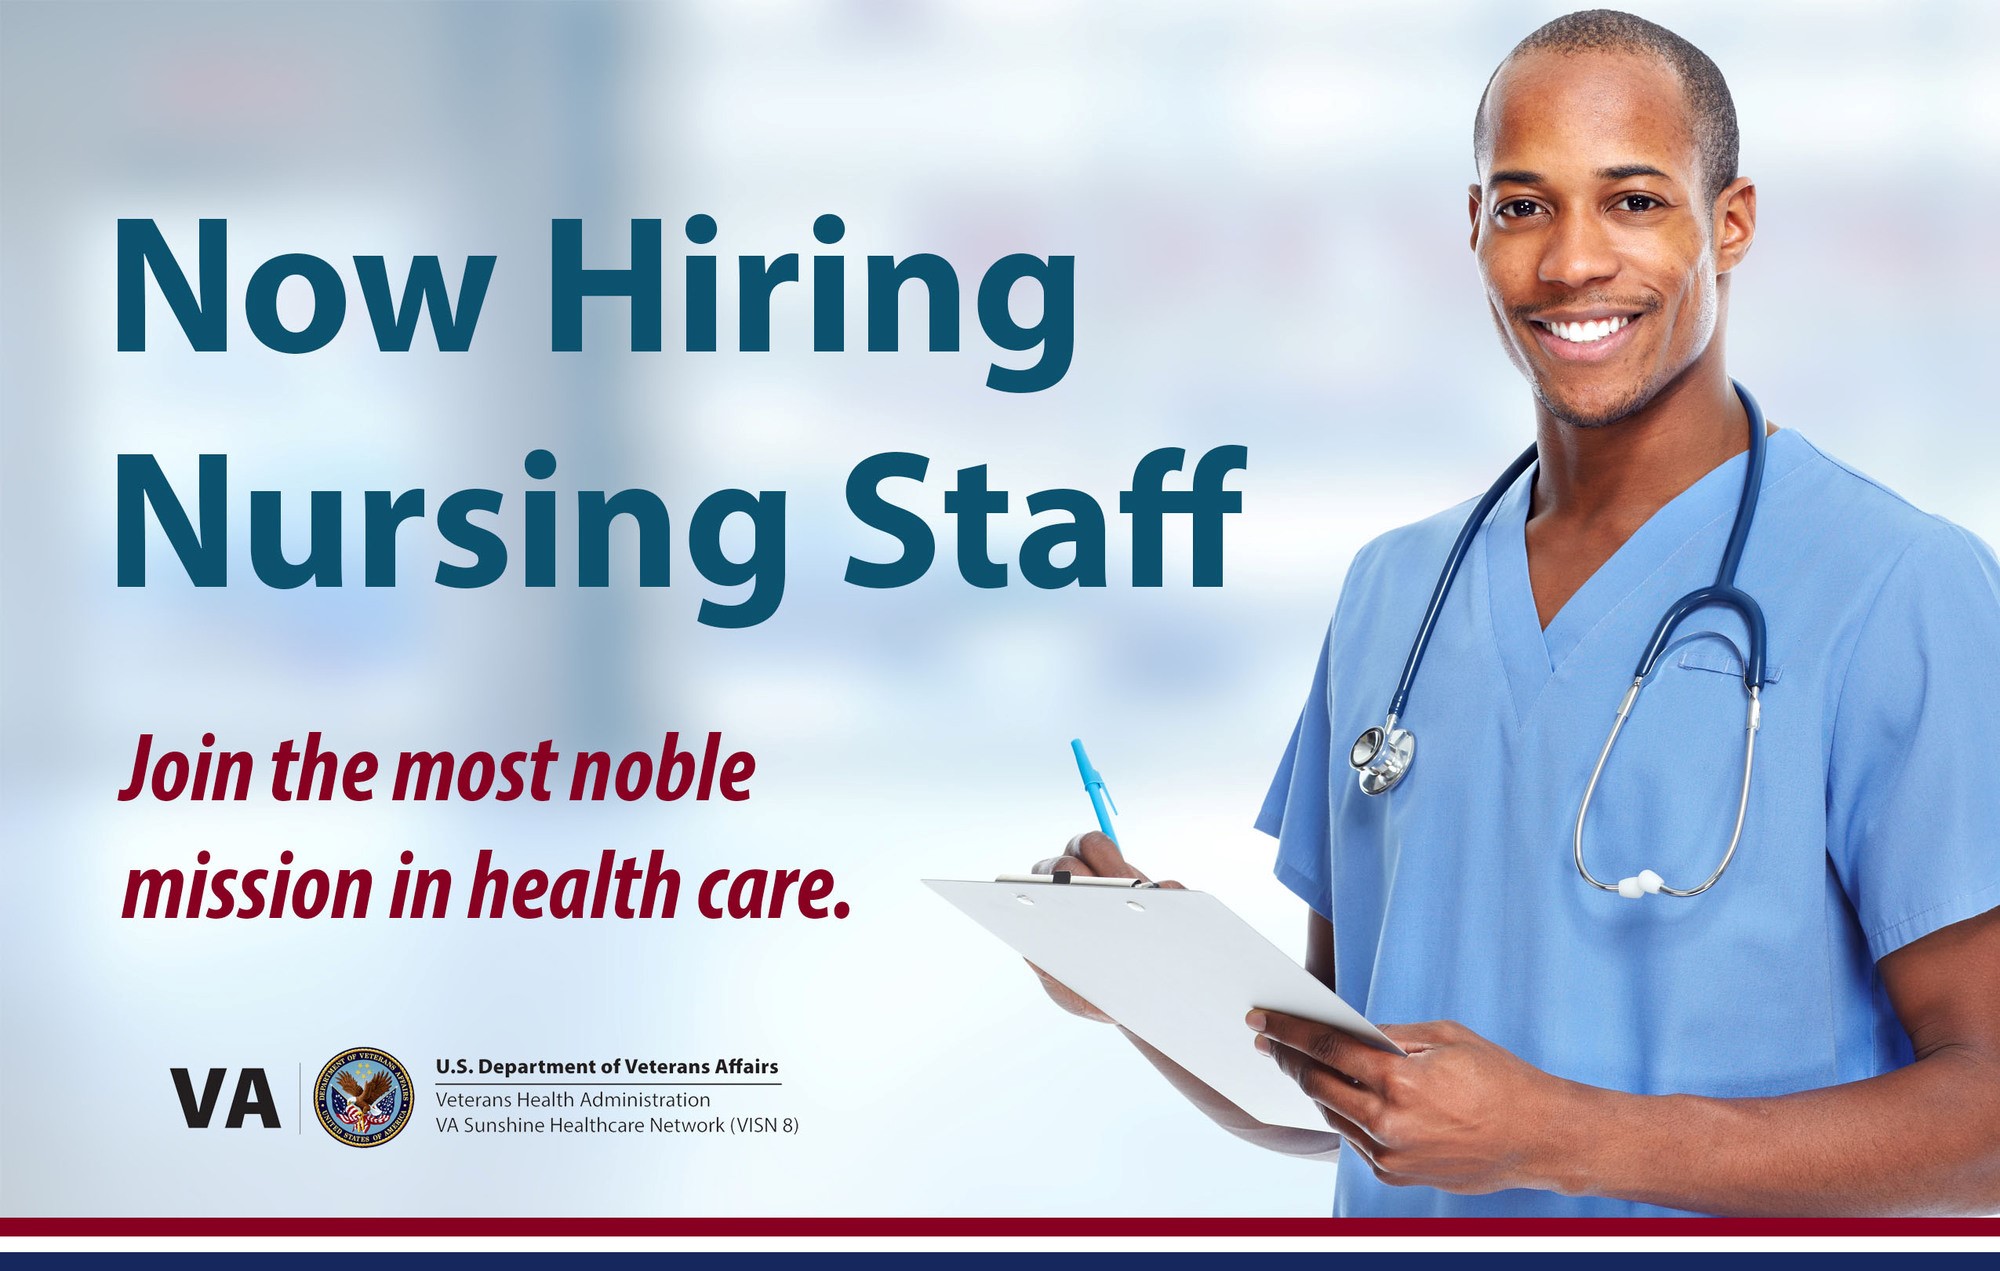 VA Hiring Nurses in VISN 8 area.